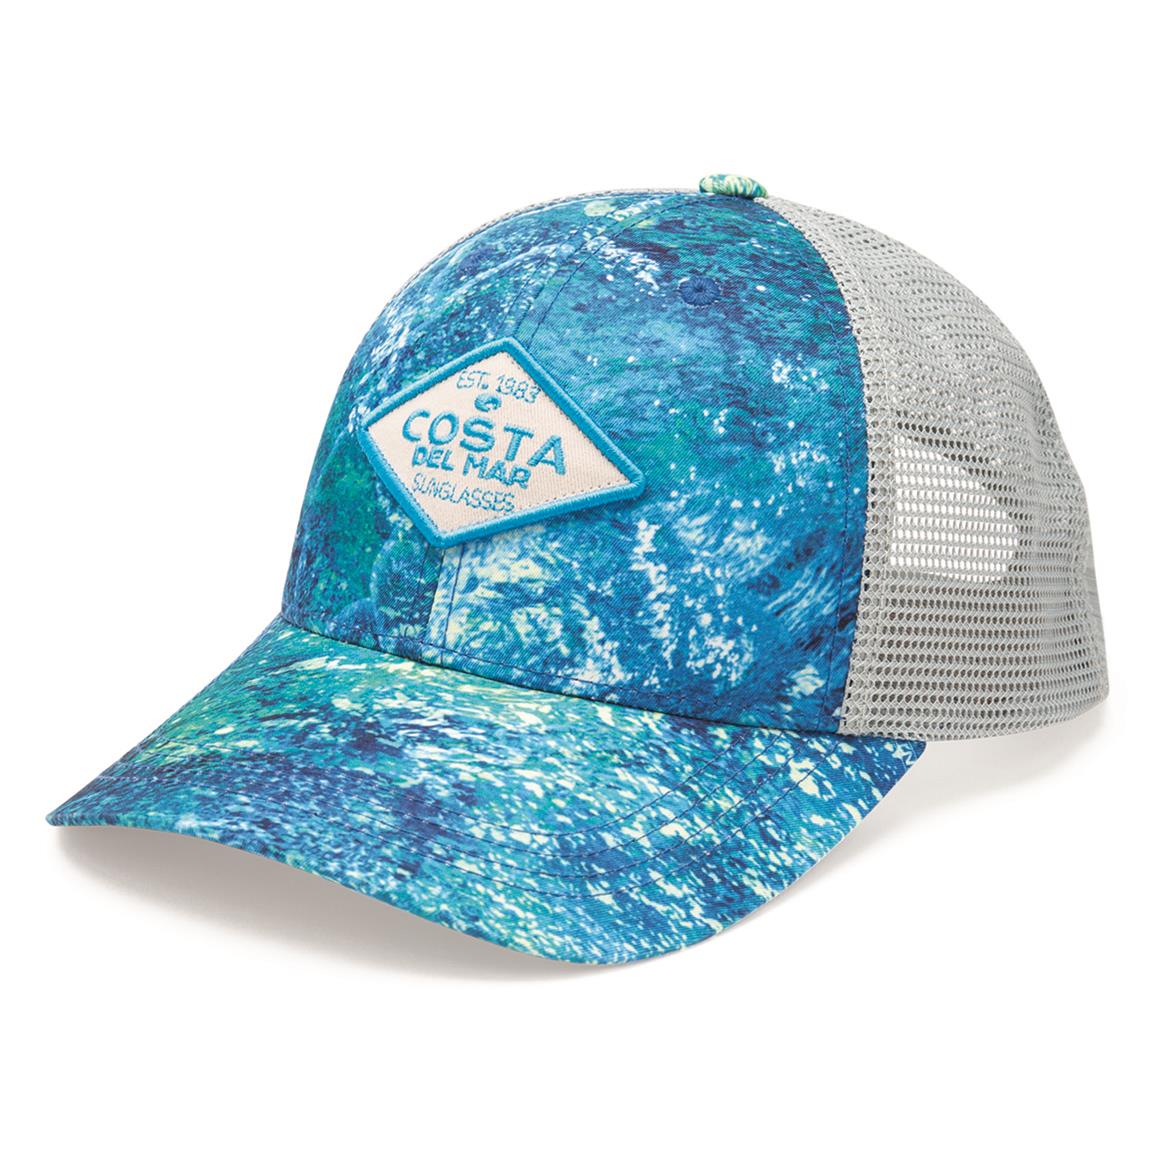 Costa Mossy Oak Coastal Inshore Trucker Hat, Blue Camo